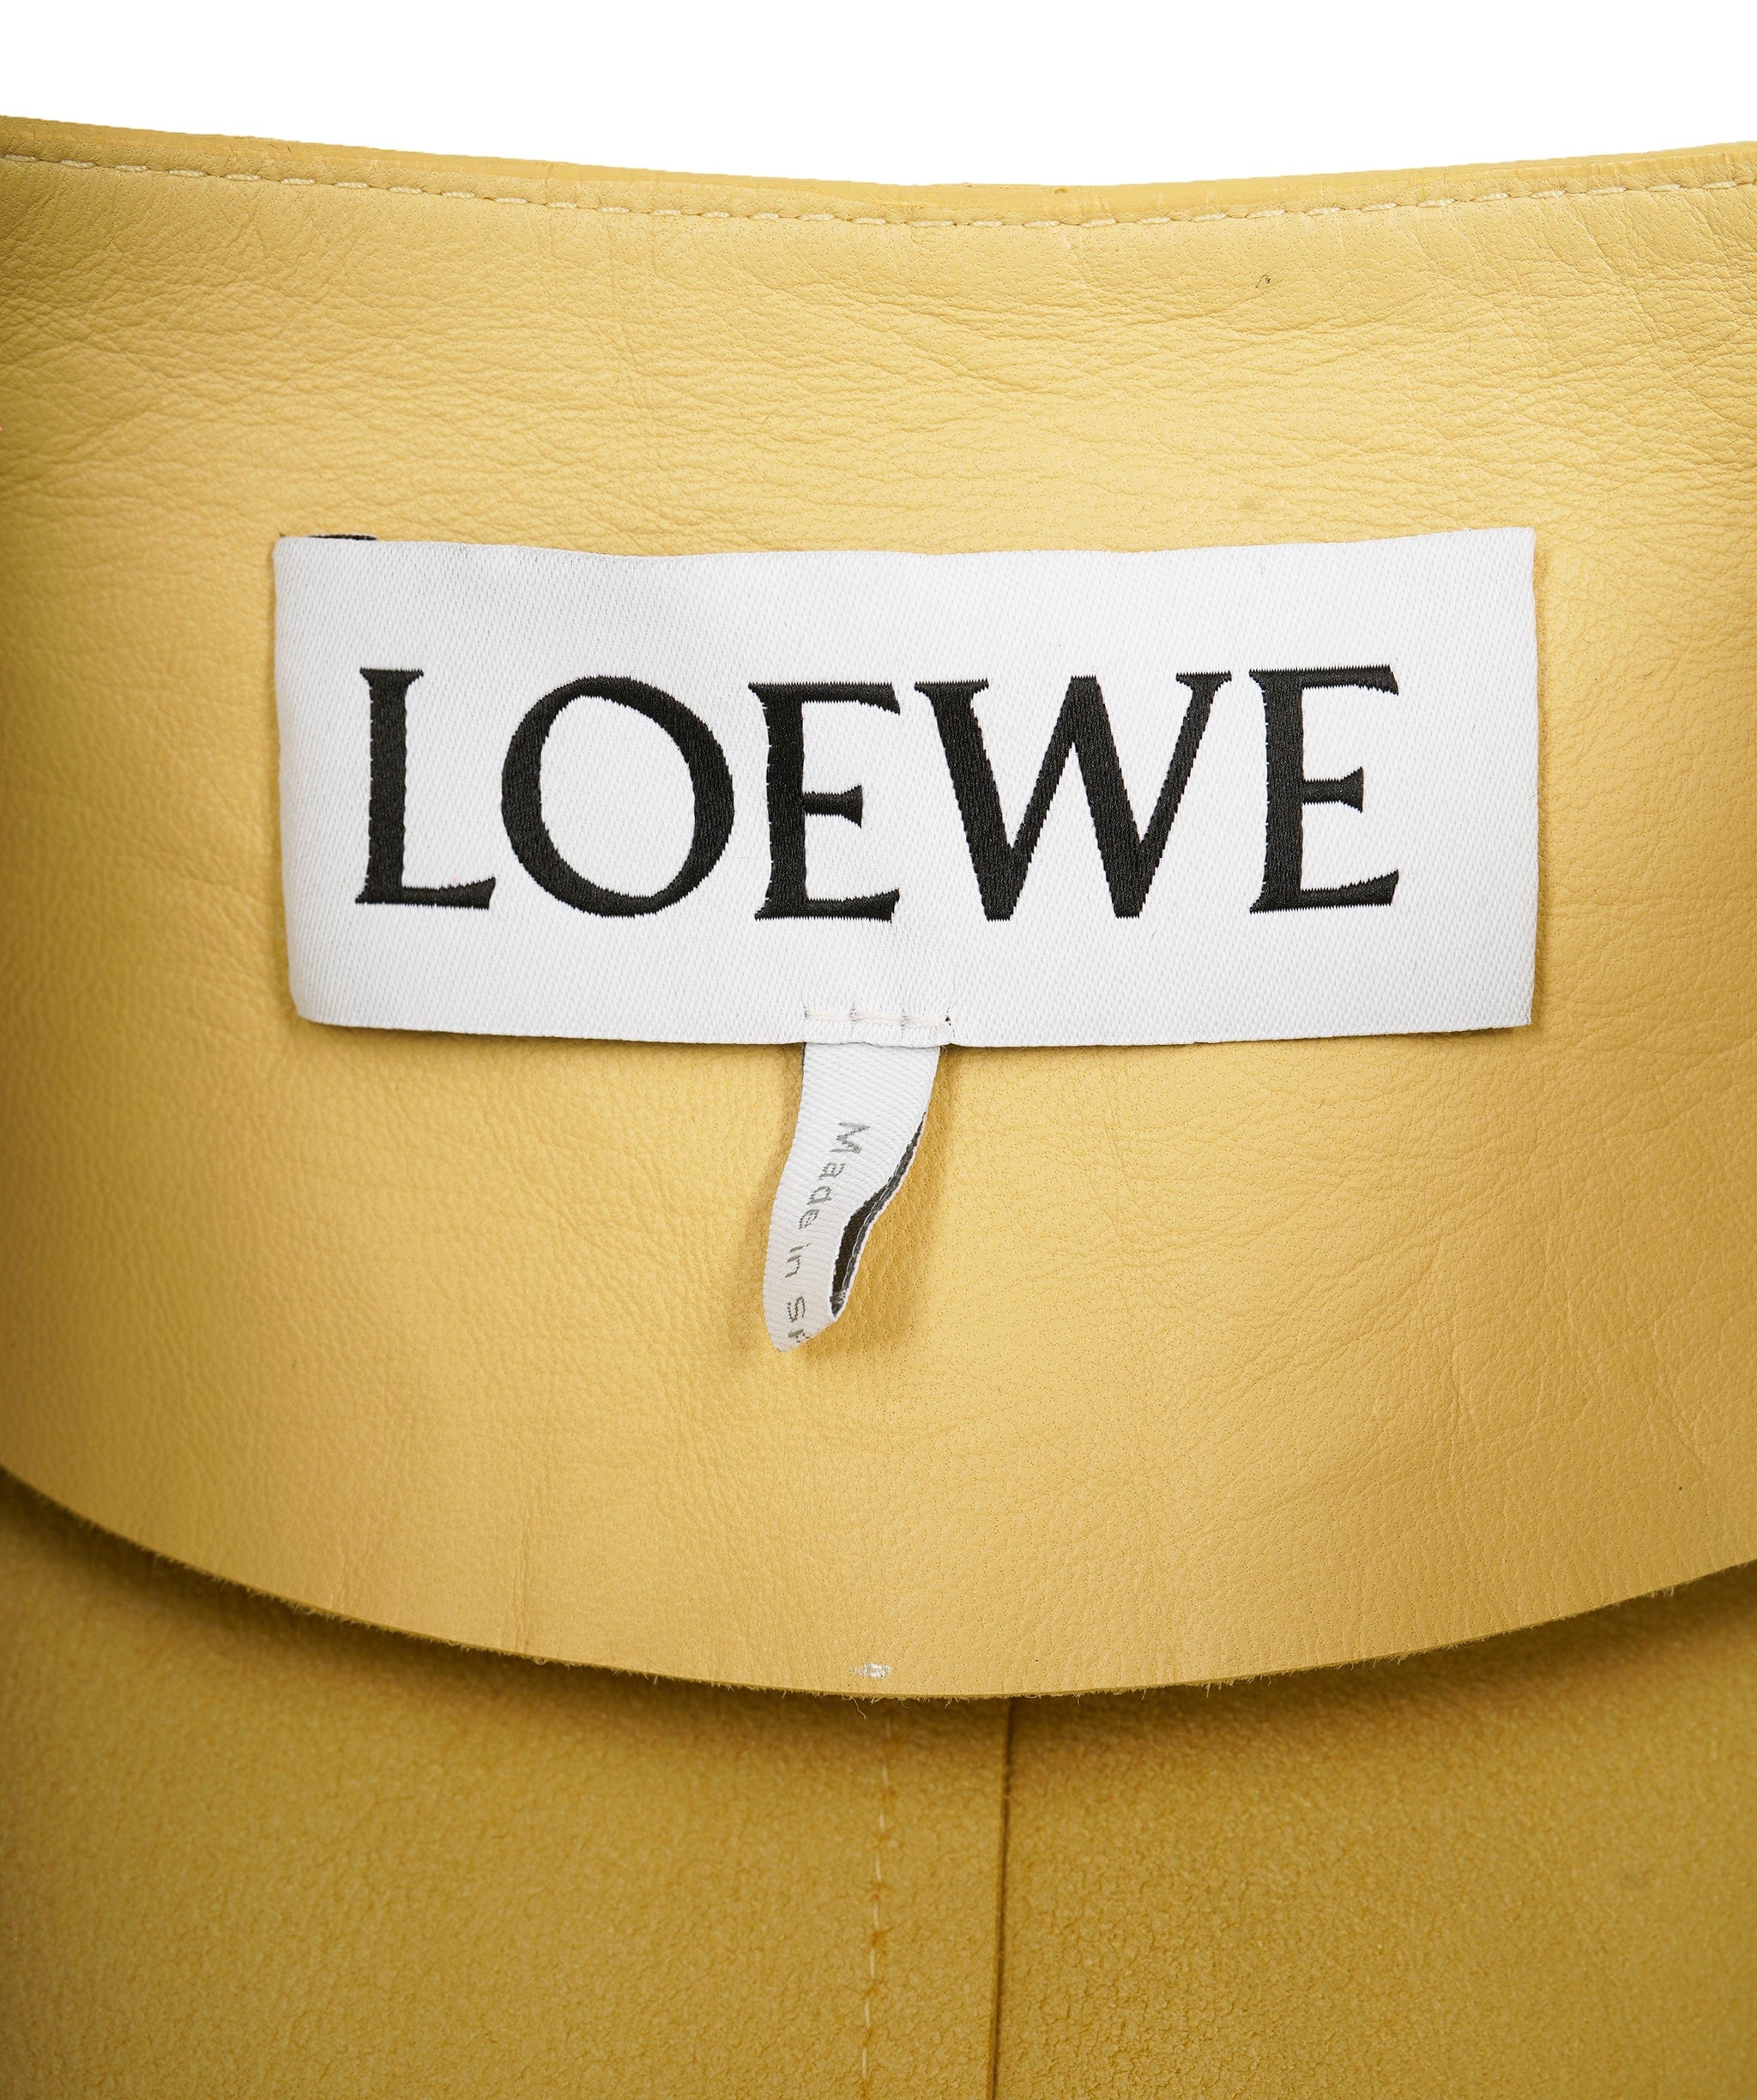 Loewe loewe leather yellow trench  AVC1731